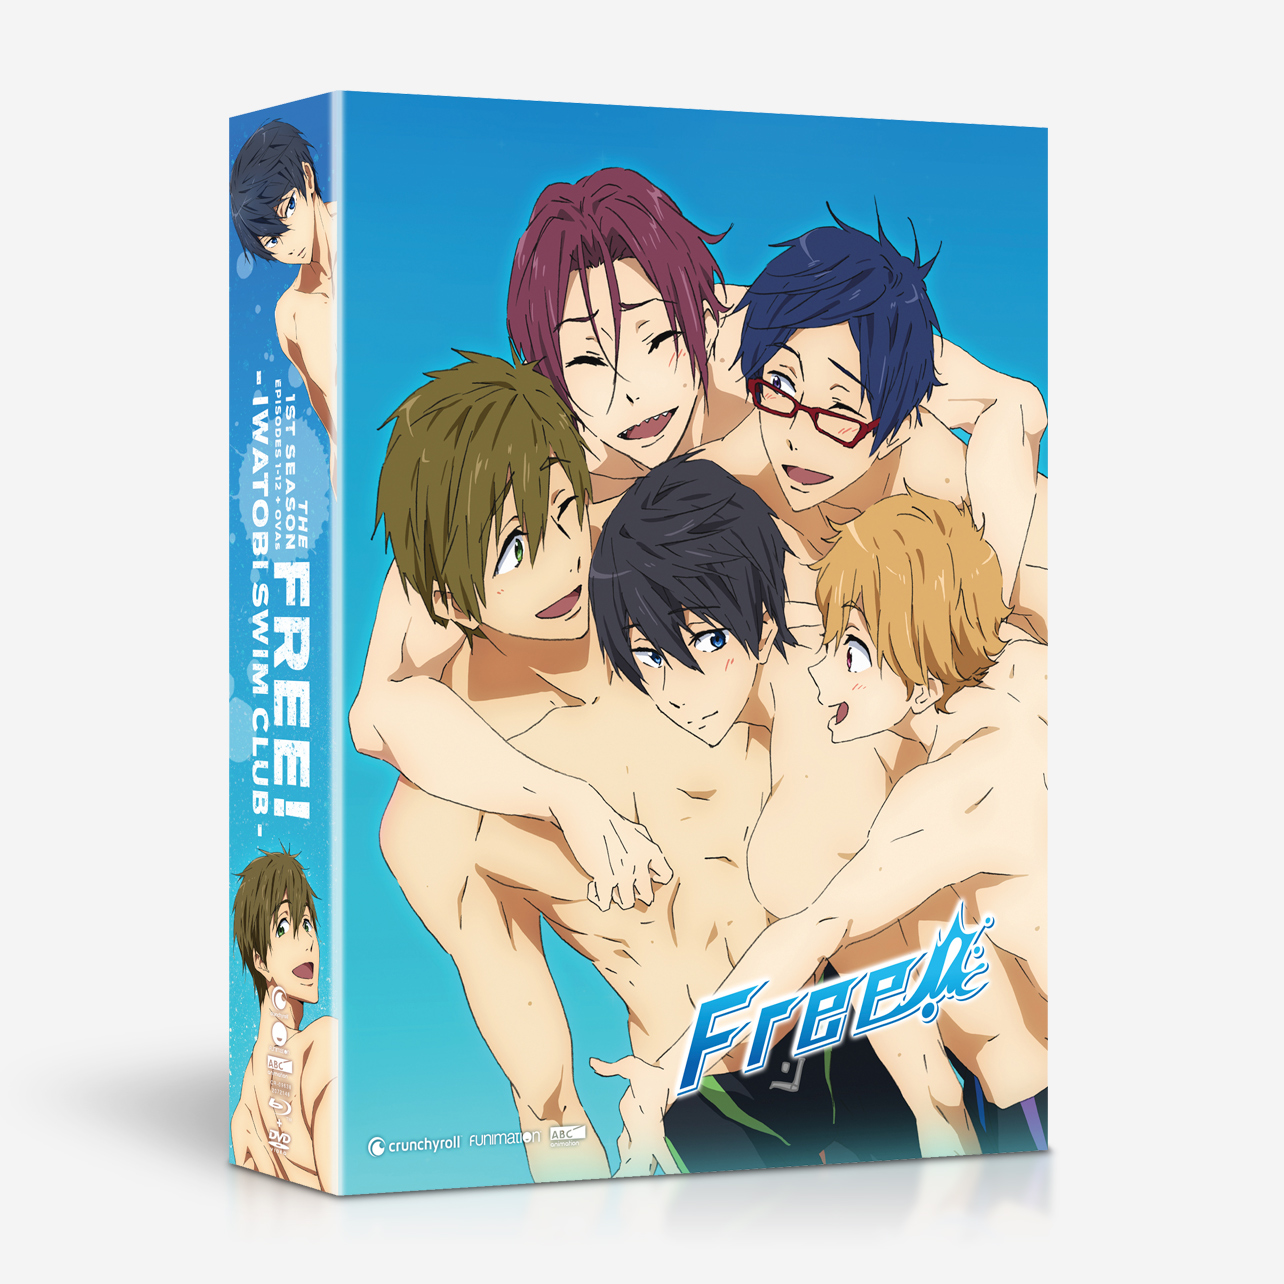 Free! Iwatobi Swim Club Season 1 Limited Edition Blu-ray/DVD image count 0